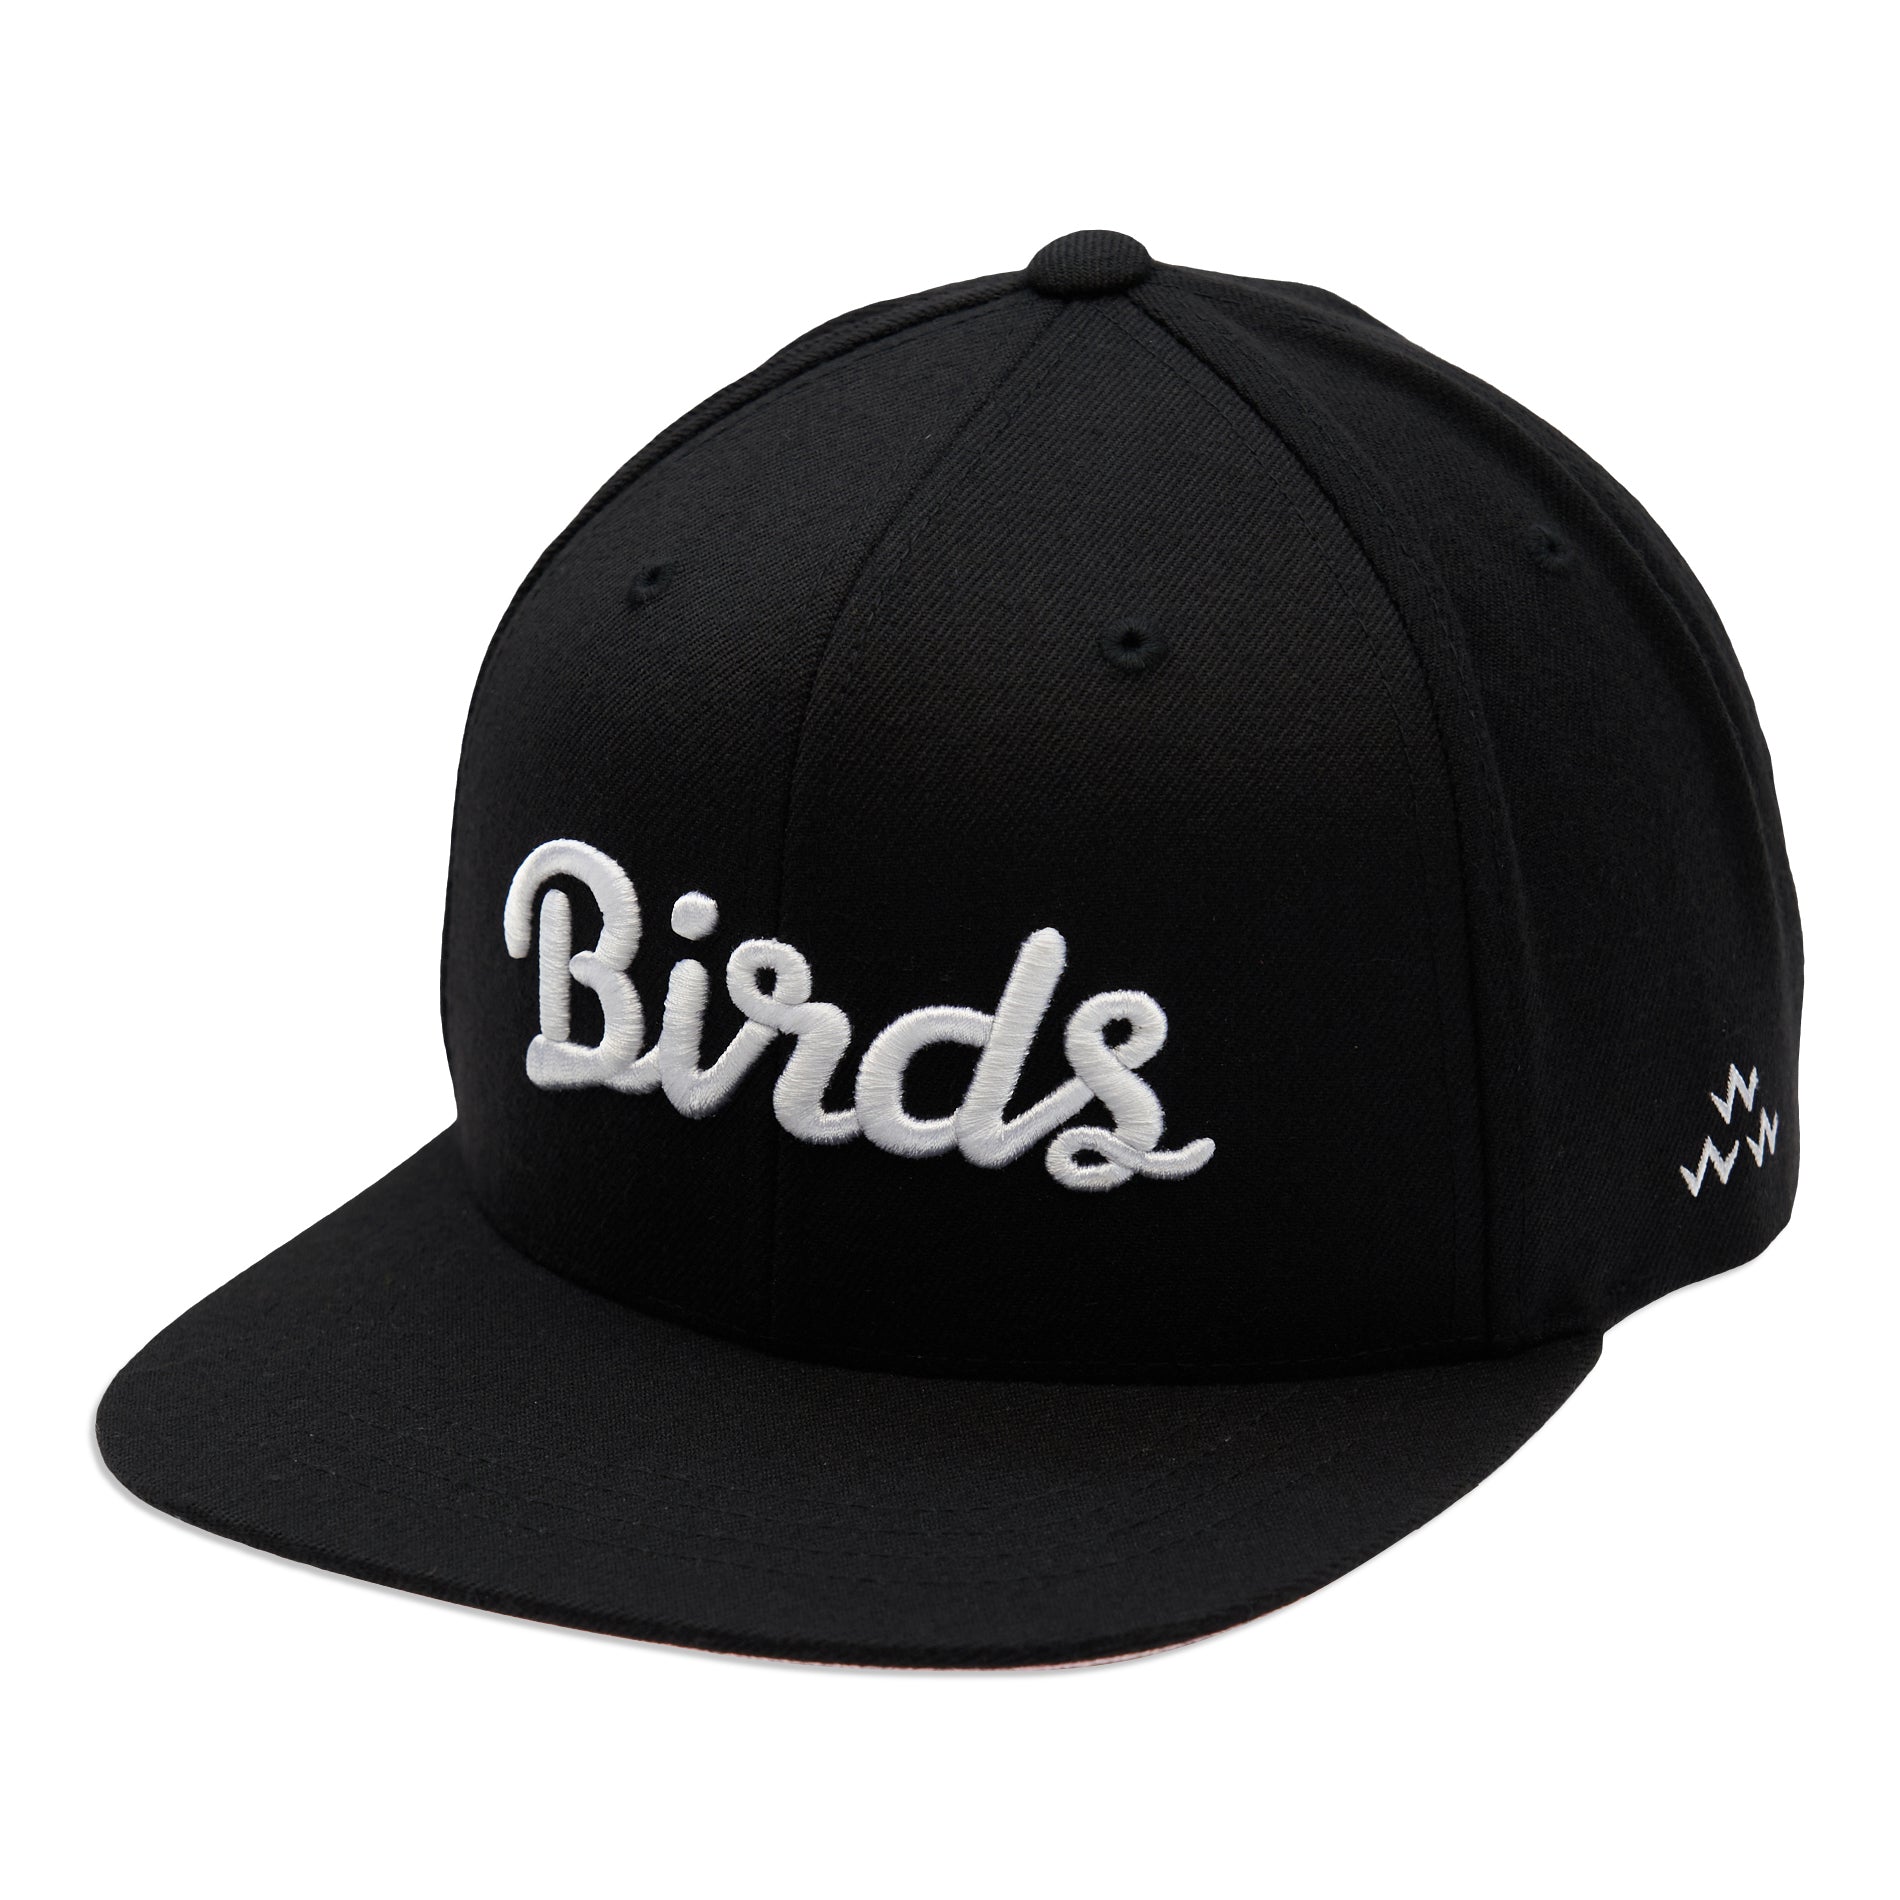 birds-of-condor-black-flat-peak-snapback-hat-front